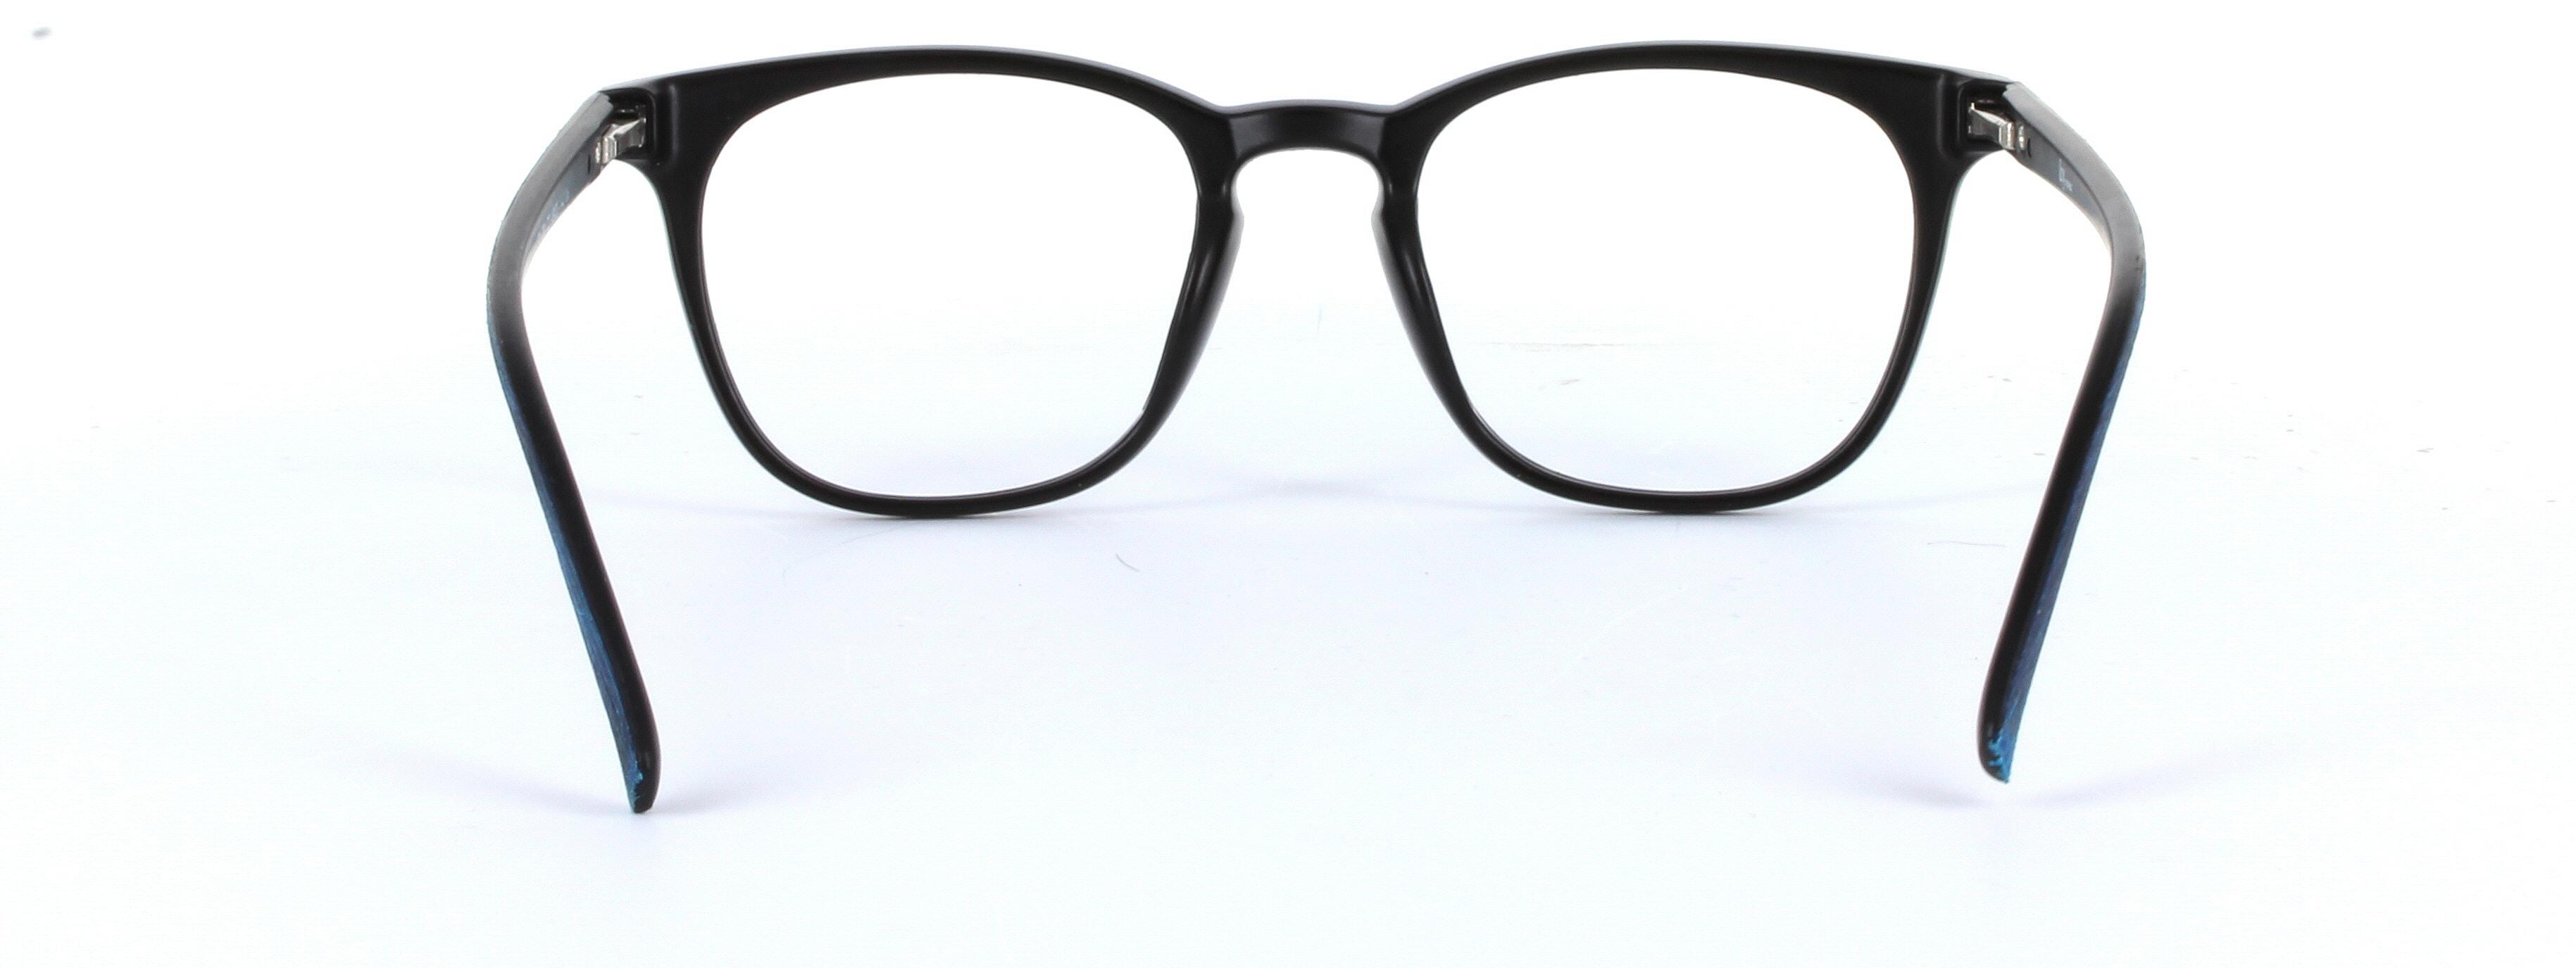 Aubrey Blue Full Rim Oval Round Plastic Glasses - Image View 3